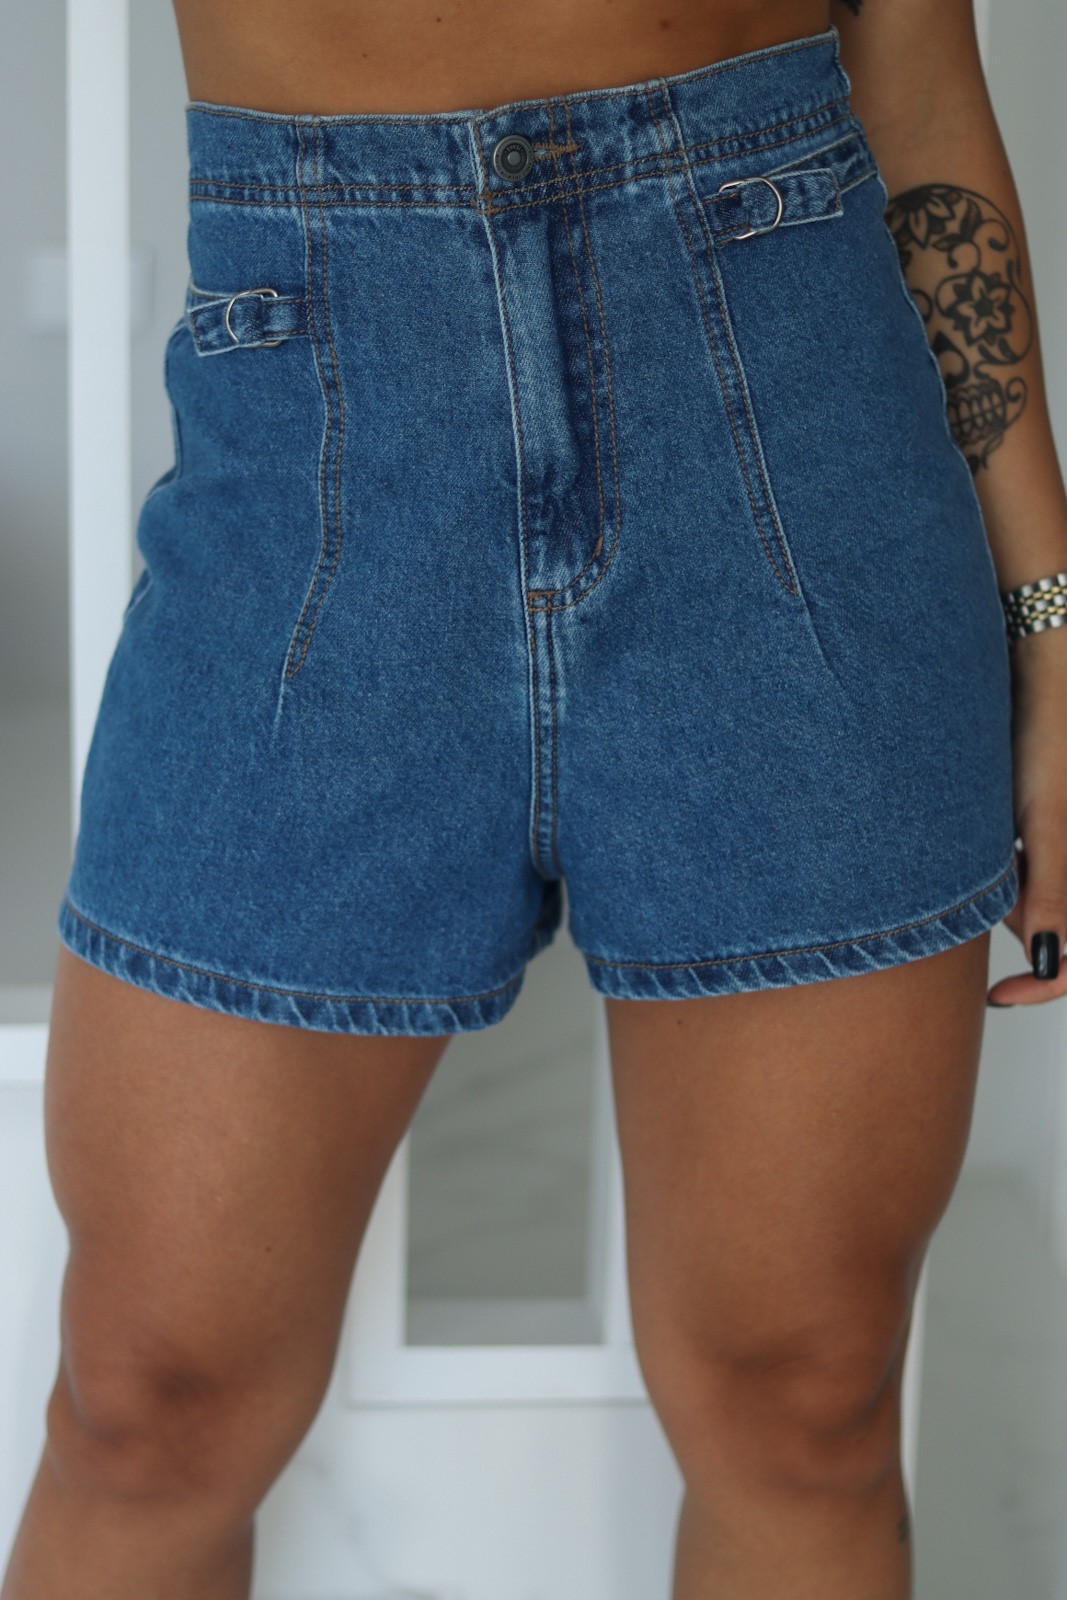 Shorts Jeans Fivela